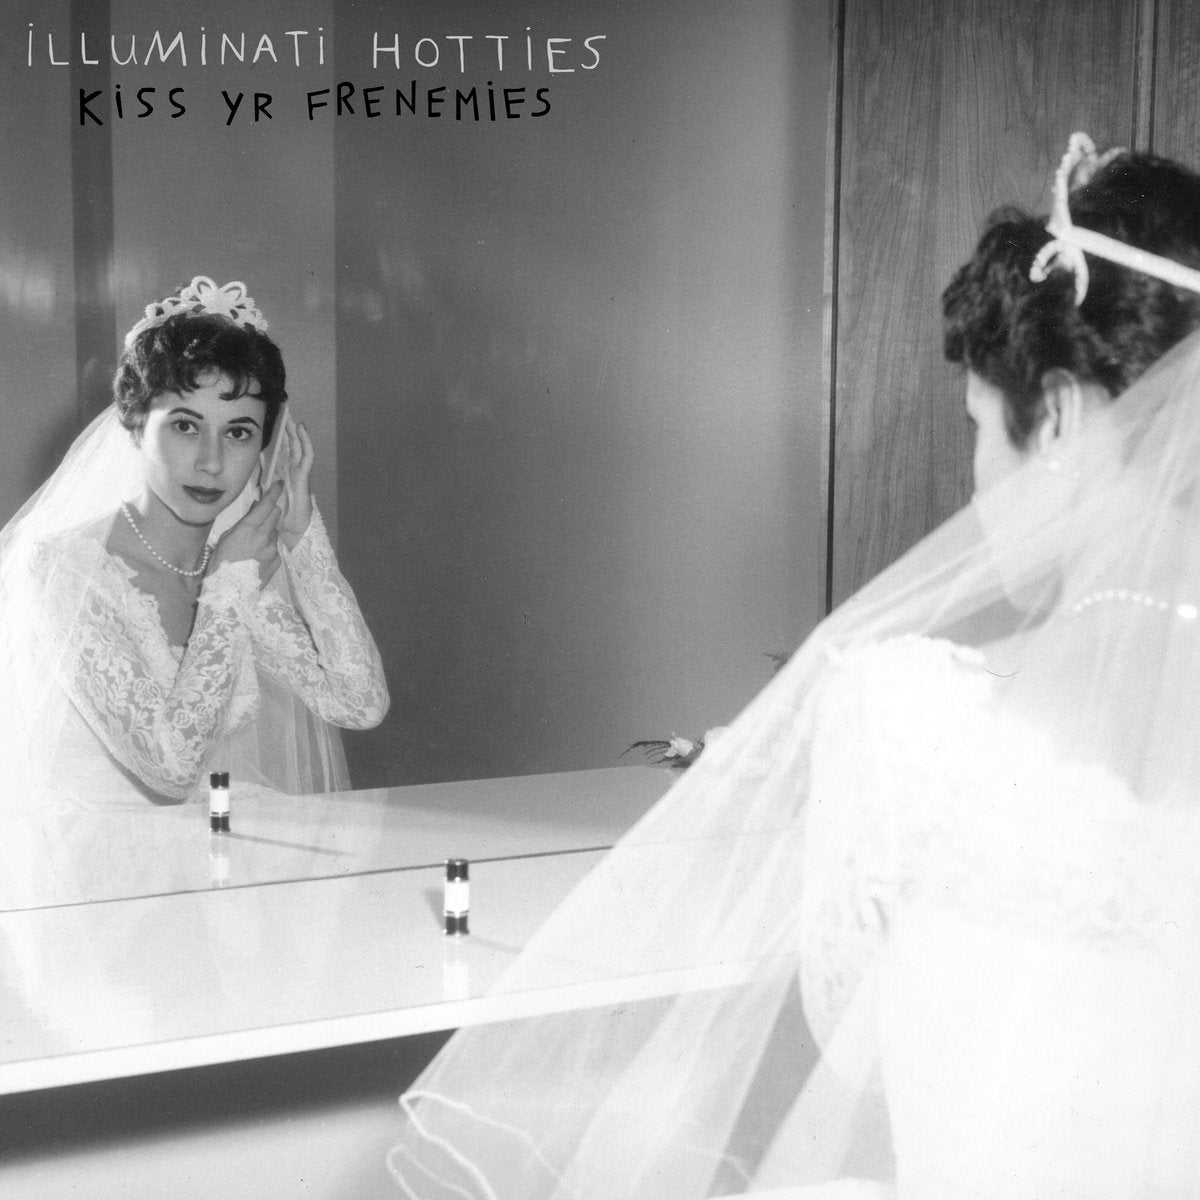 Illuminati Hotties "Kiss Yr Frenemies" LP